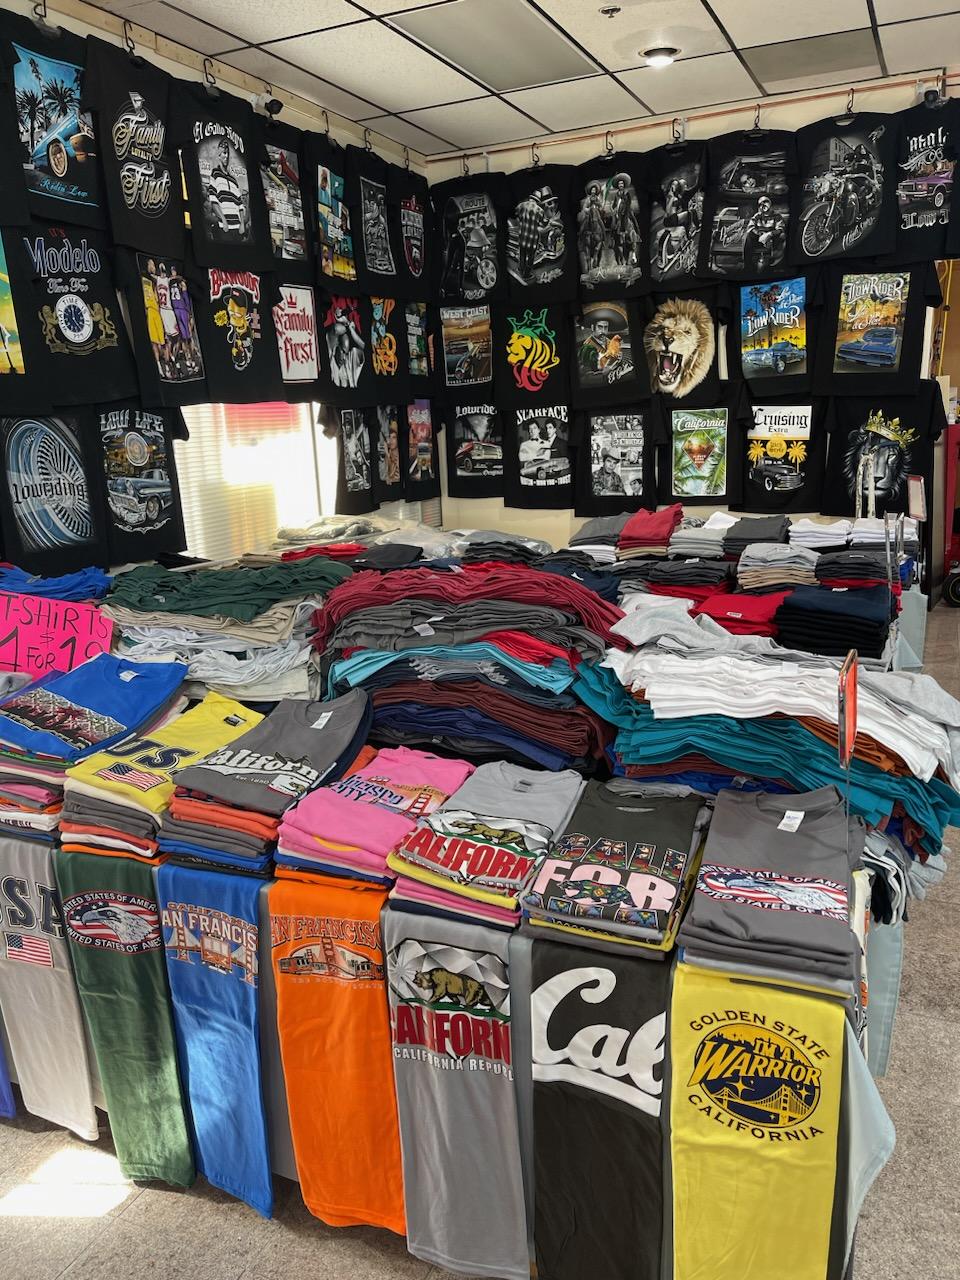 Game & T-shirts | 2114 Senter Rd STE 1, San Jose, CA 95112 | Phone: (408) 216-0936